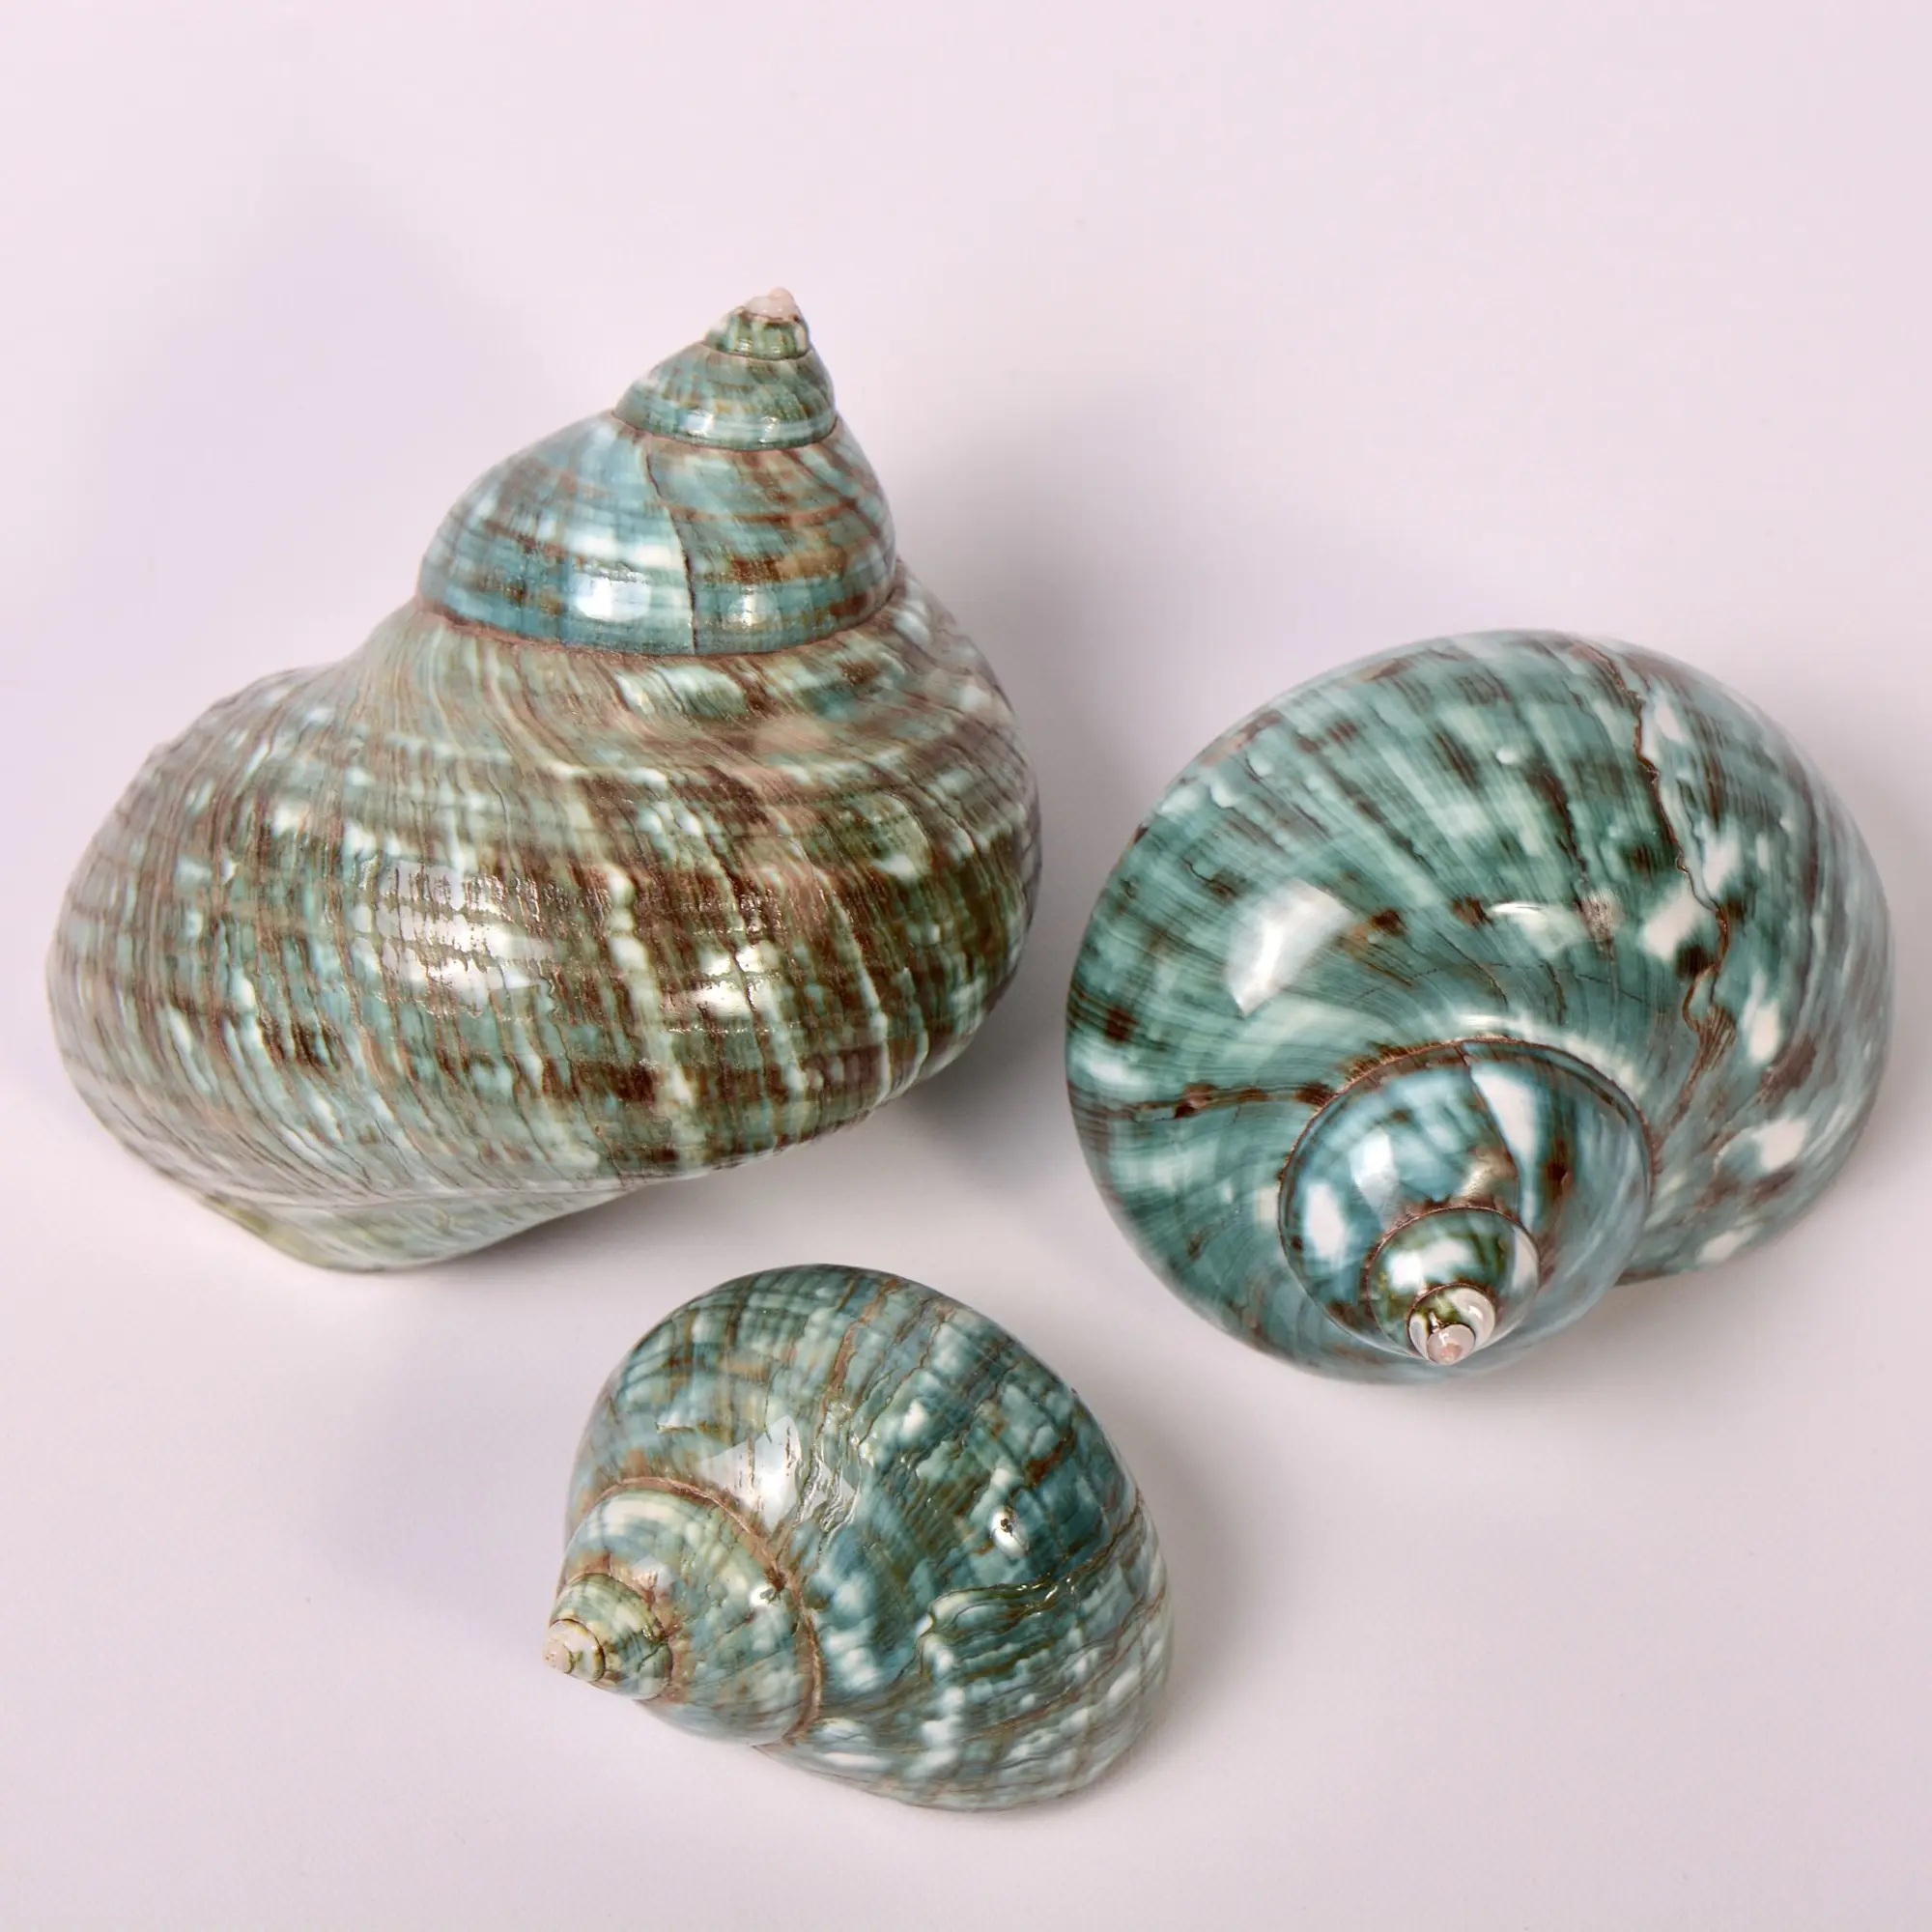 Souvenir koleksi laut kerang laut grosir dekorasi pantai kerang laut turbo dekorasi rumah dan kamar